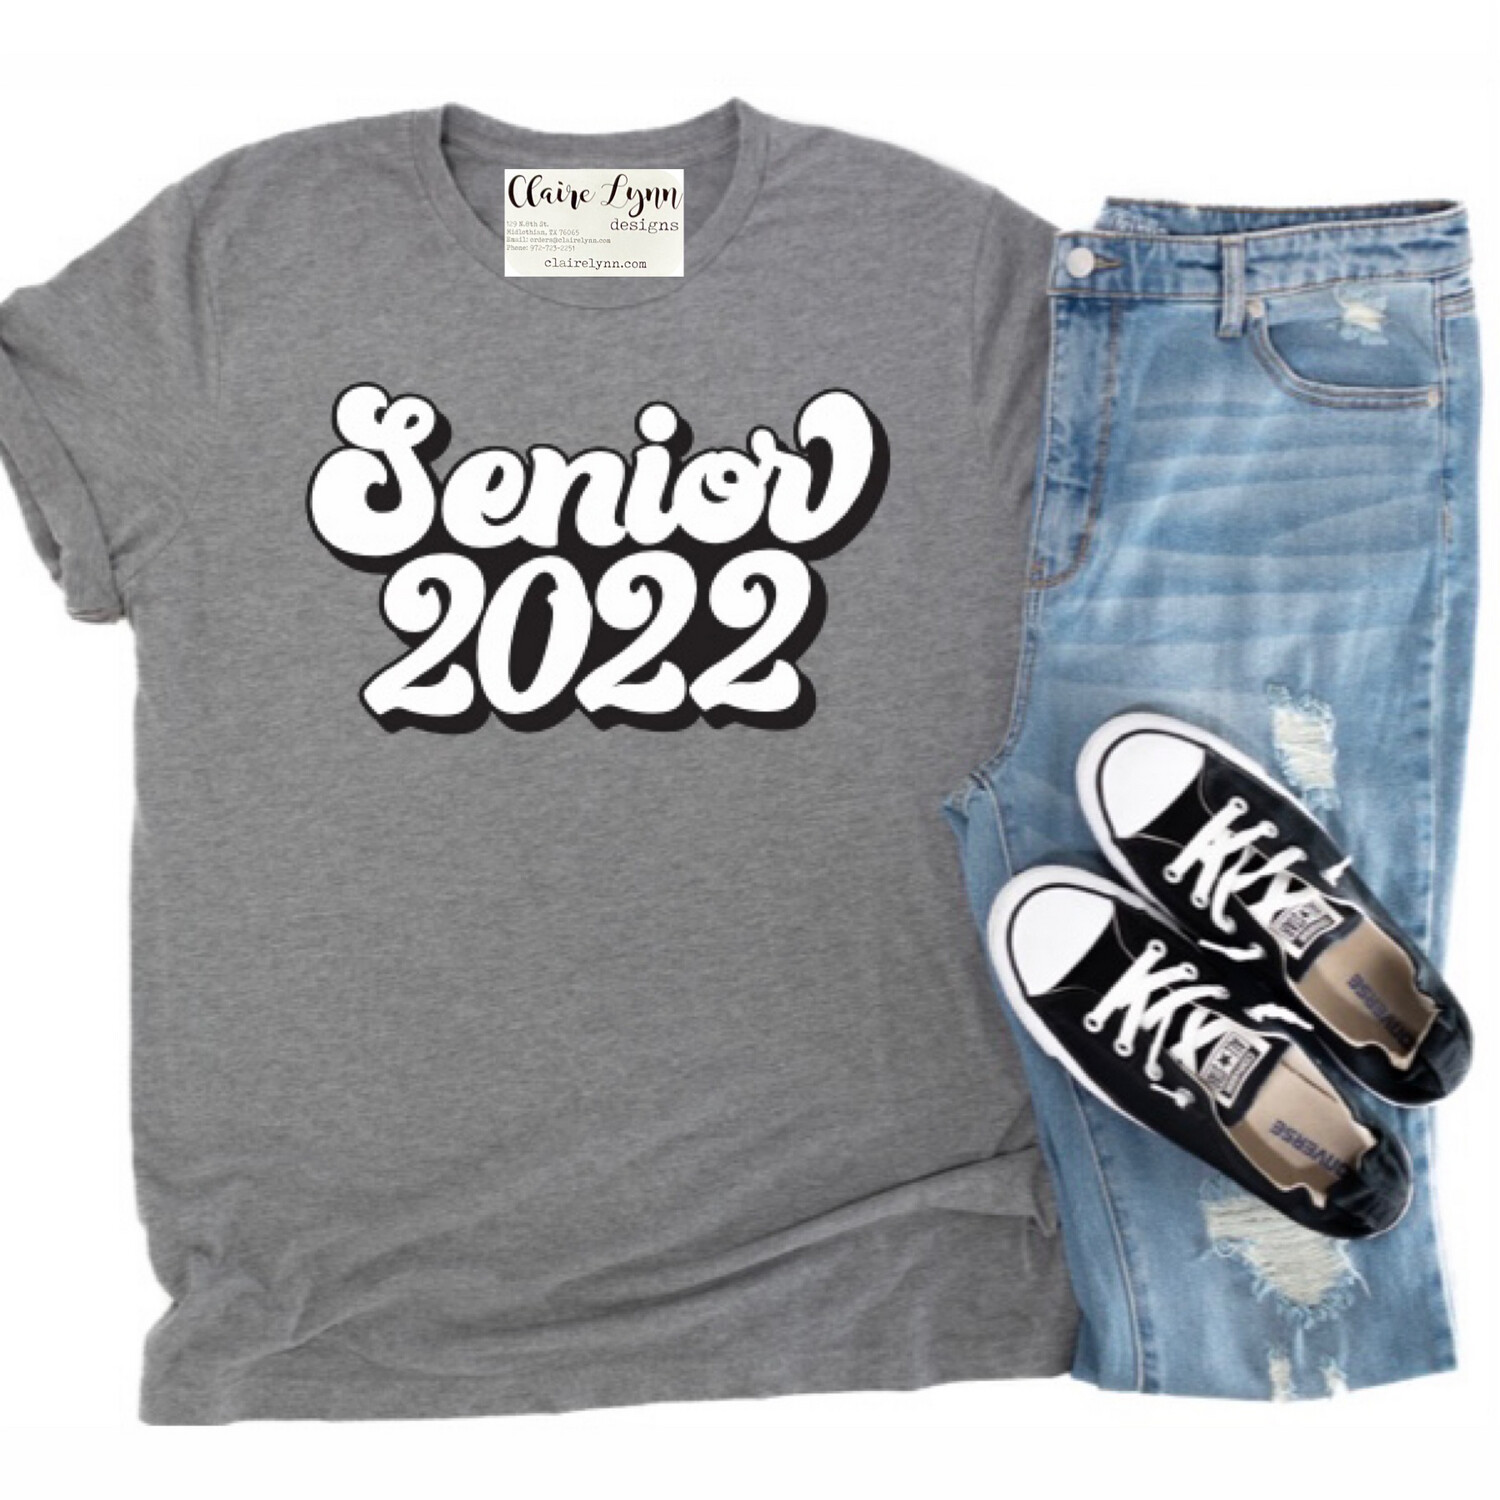 Senior 2022 Gray